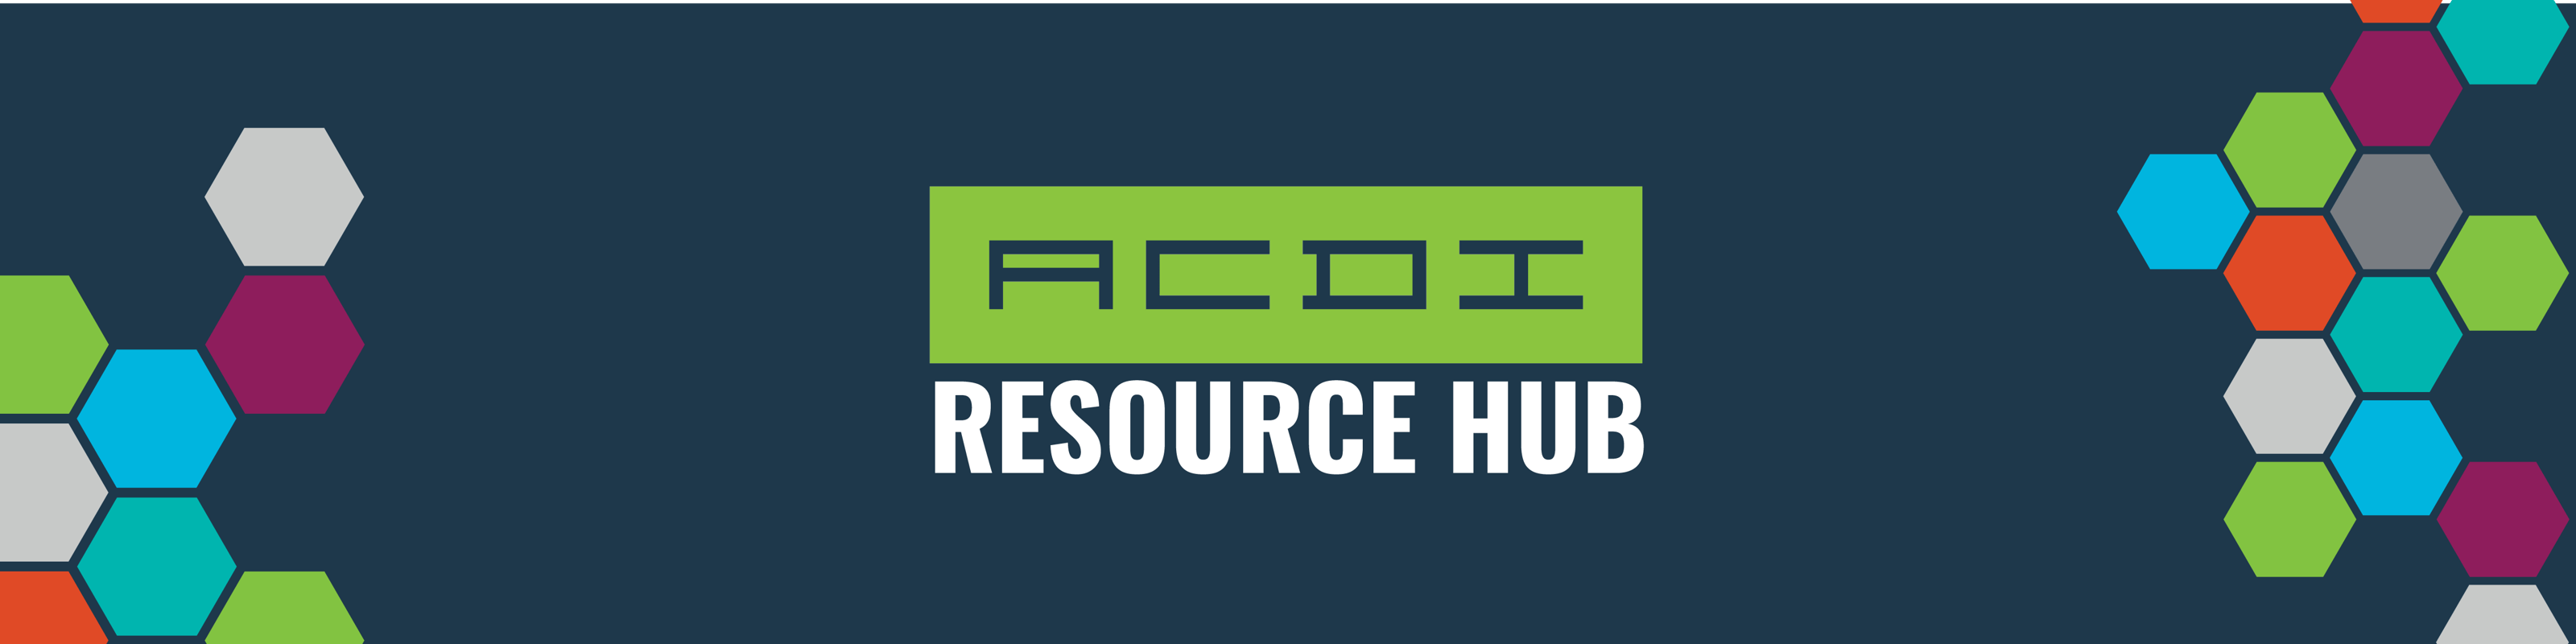 Resource Hub Icons-10